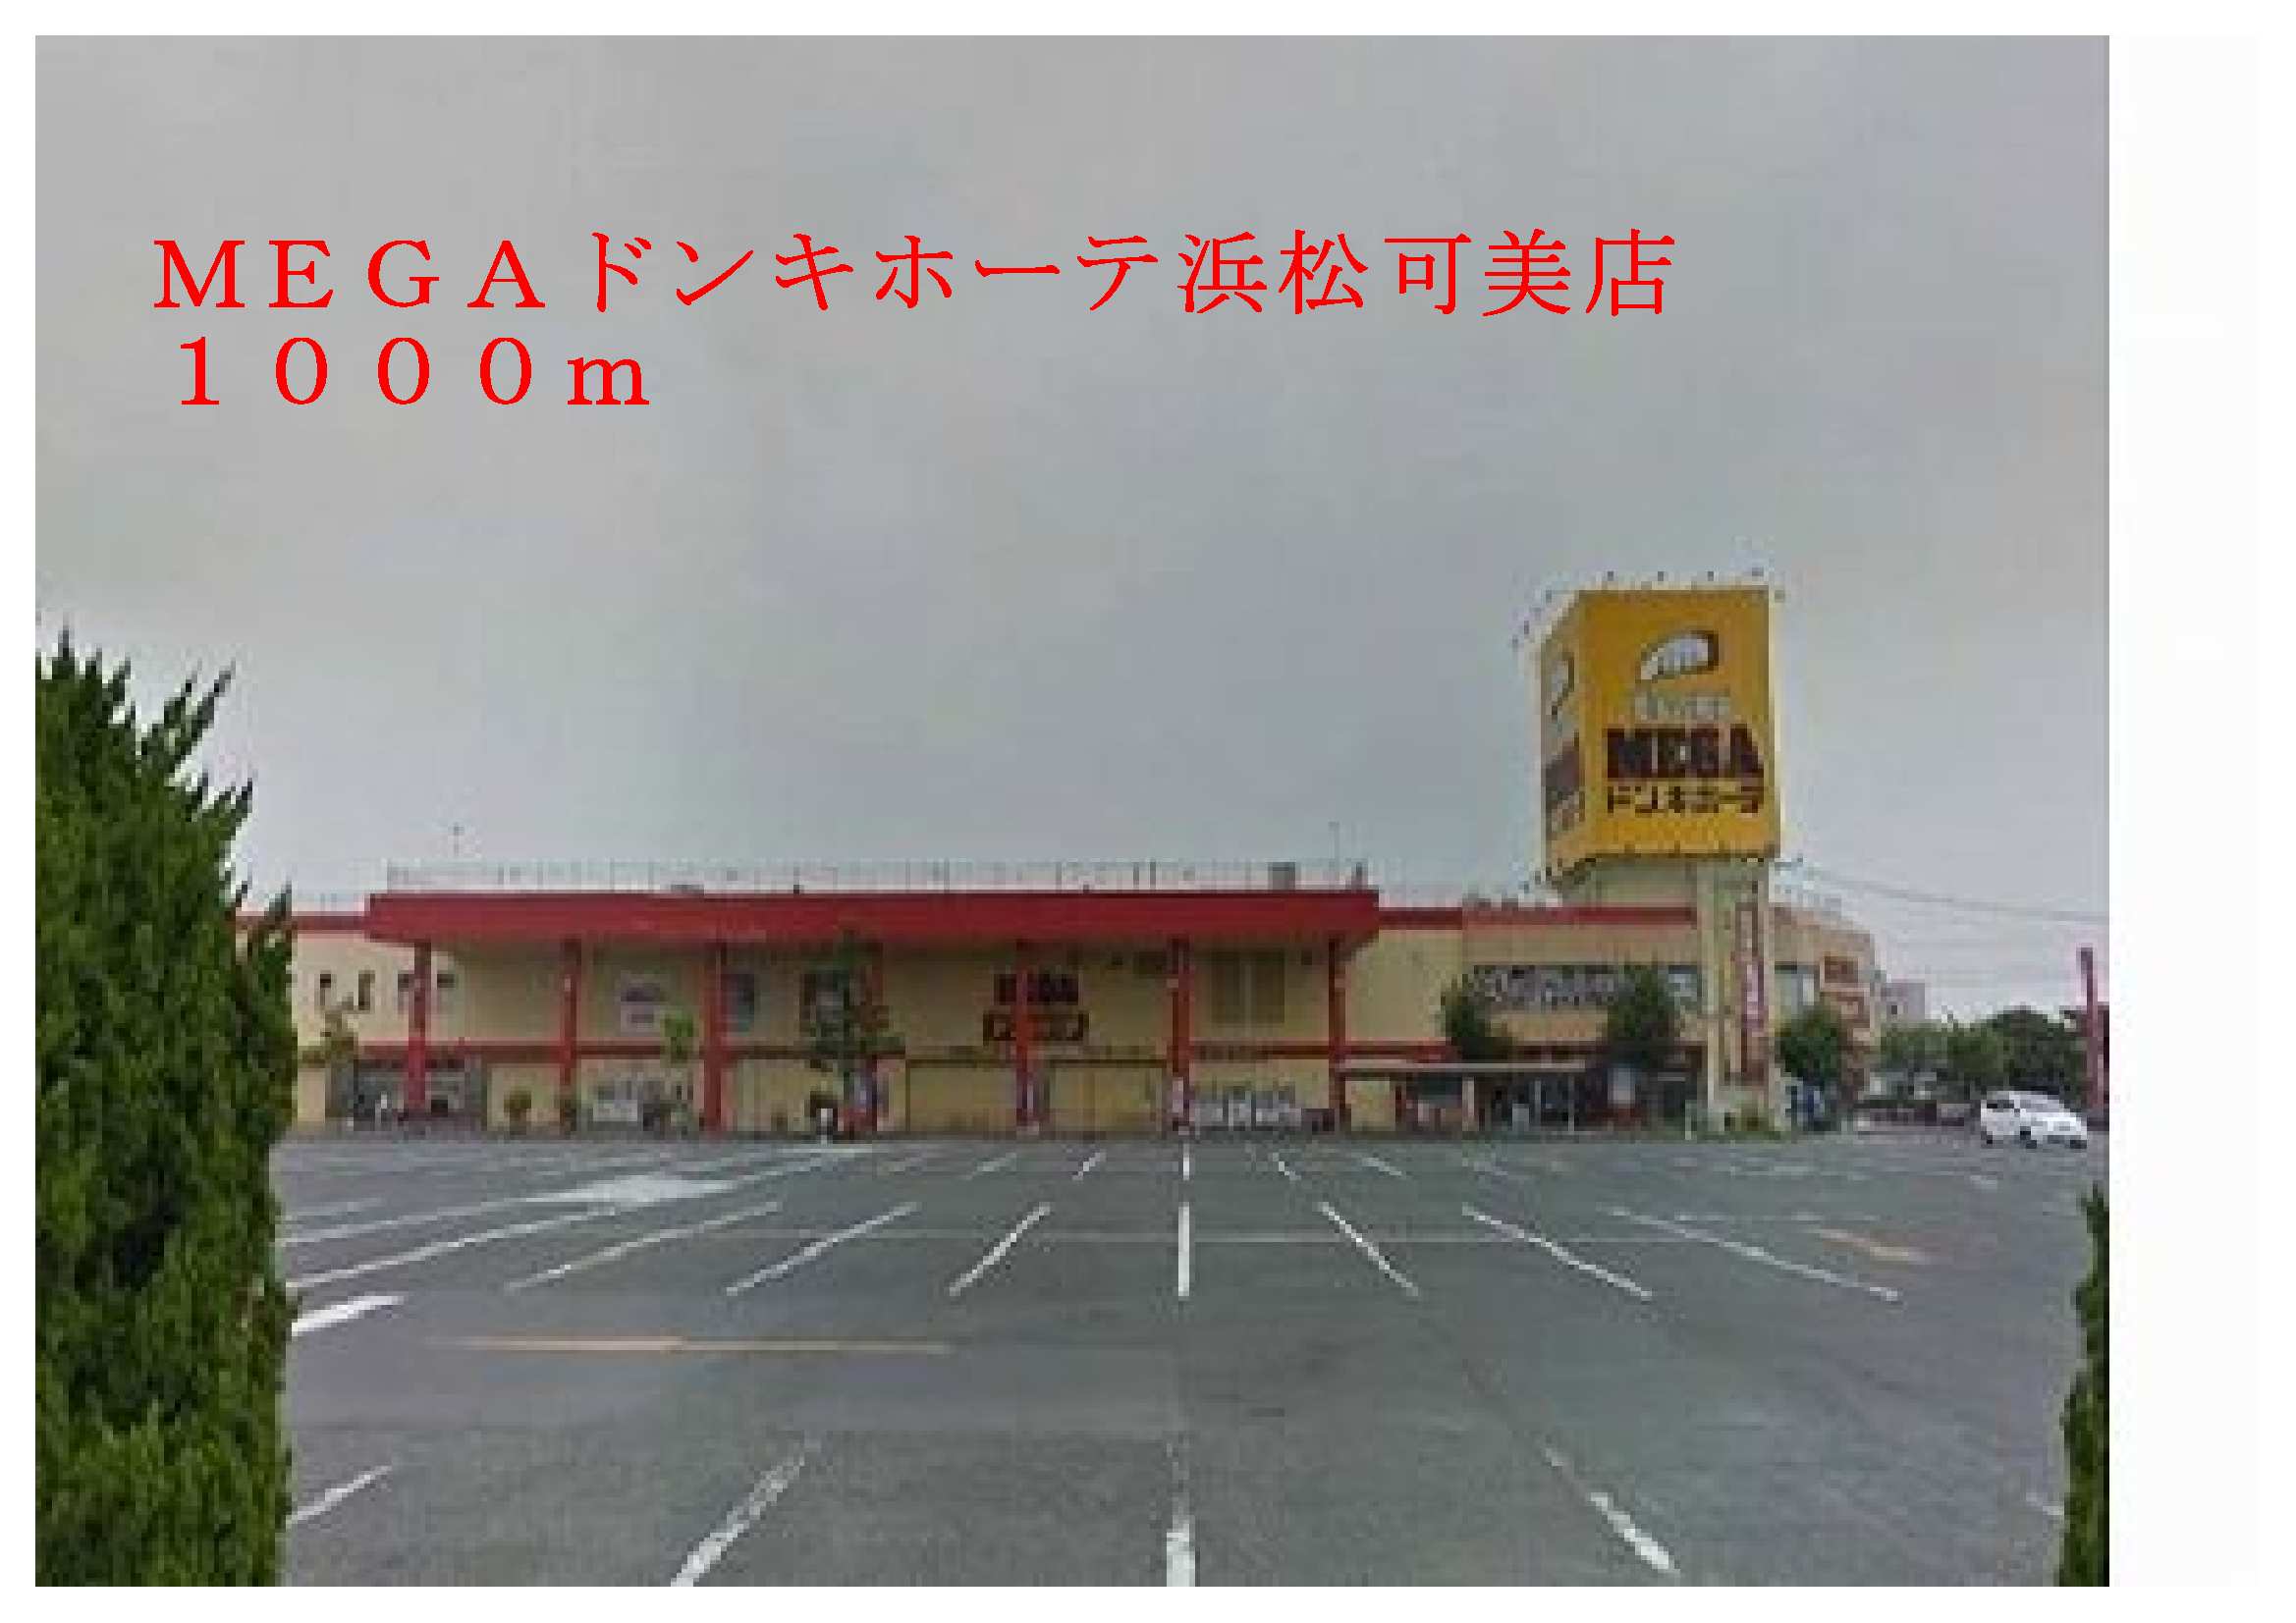 Shopping centre. MEGA Don Quixote Hamamatsu Kami shop until the (shopping center) 1000m